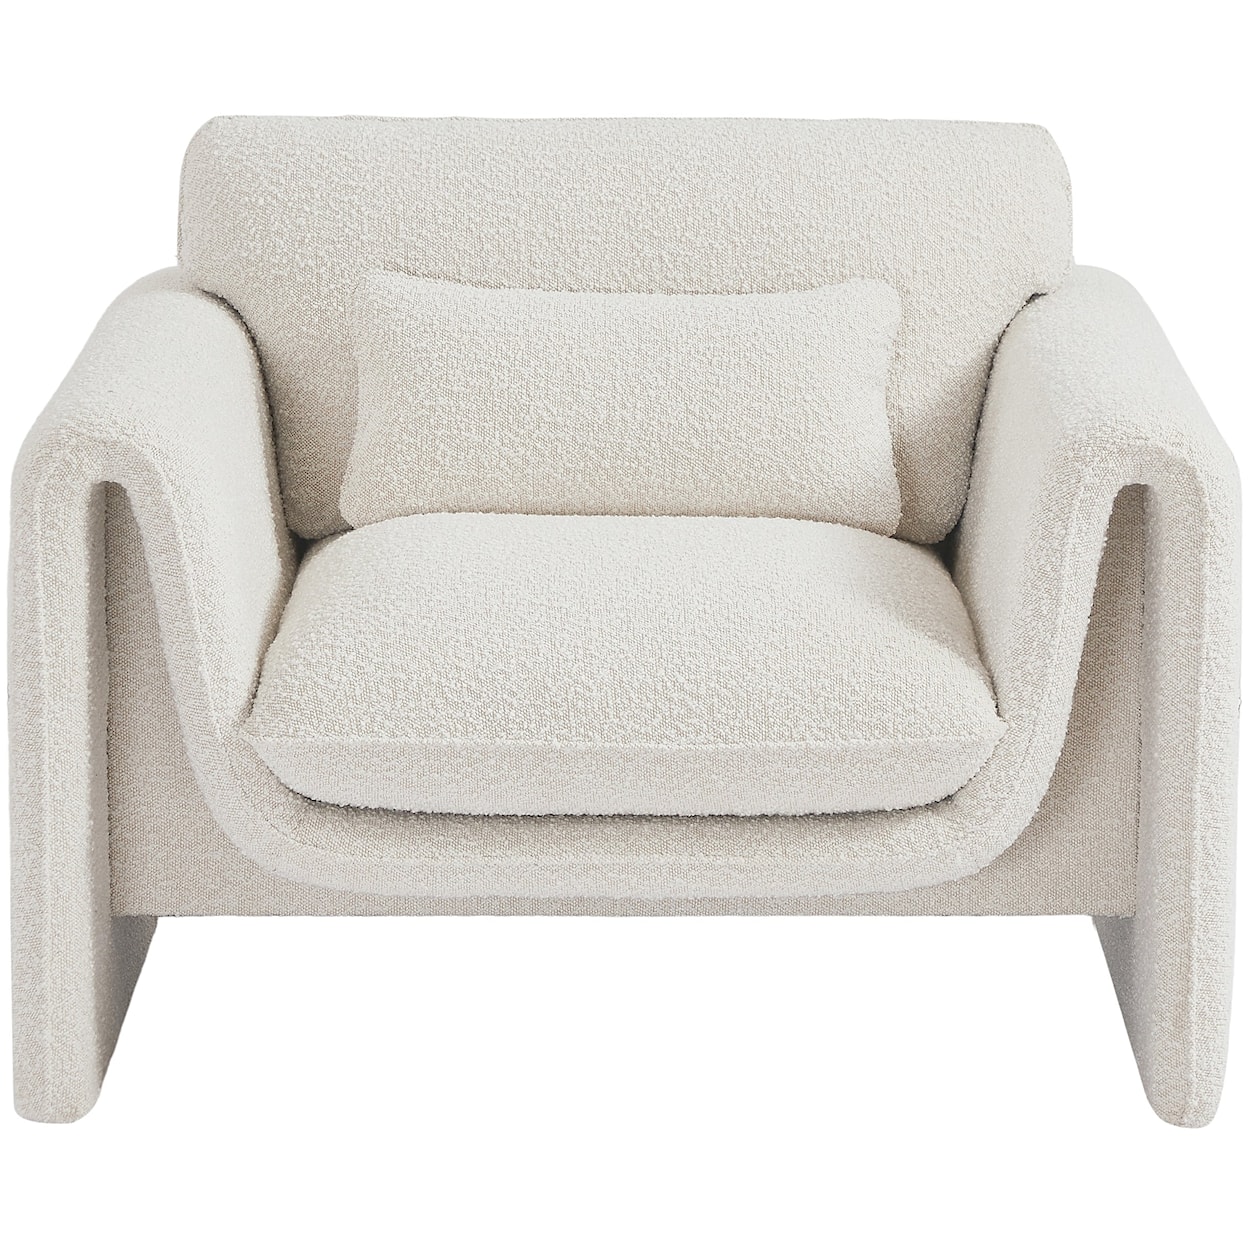 Meridian Furniture Stylus Chair